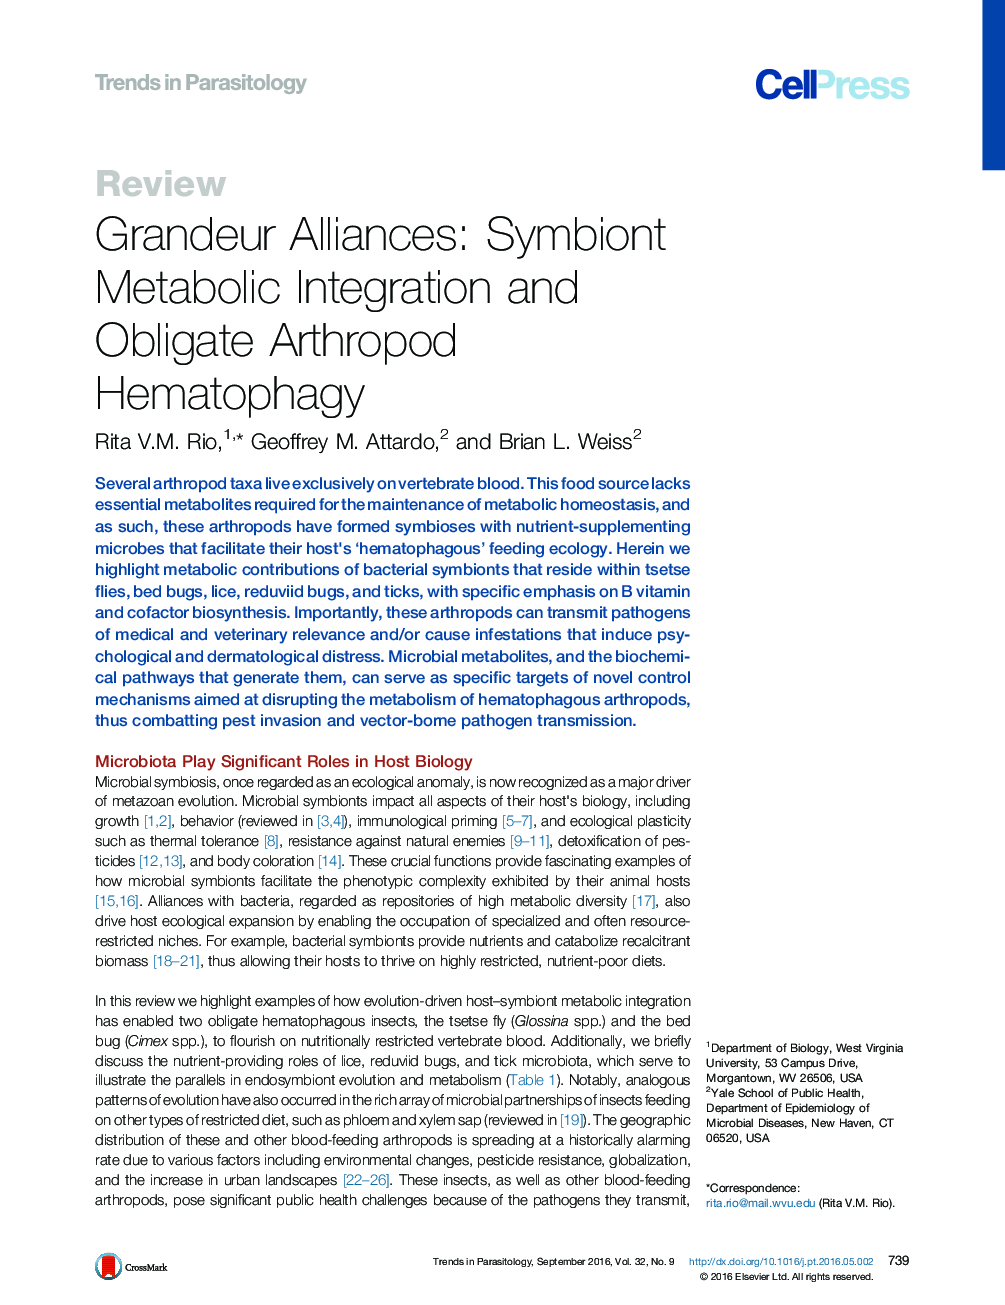 Grandeur Alliances: Symbiont Metabolic Integration and Obligate Arthropod Hematophagy